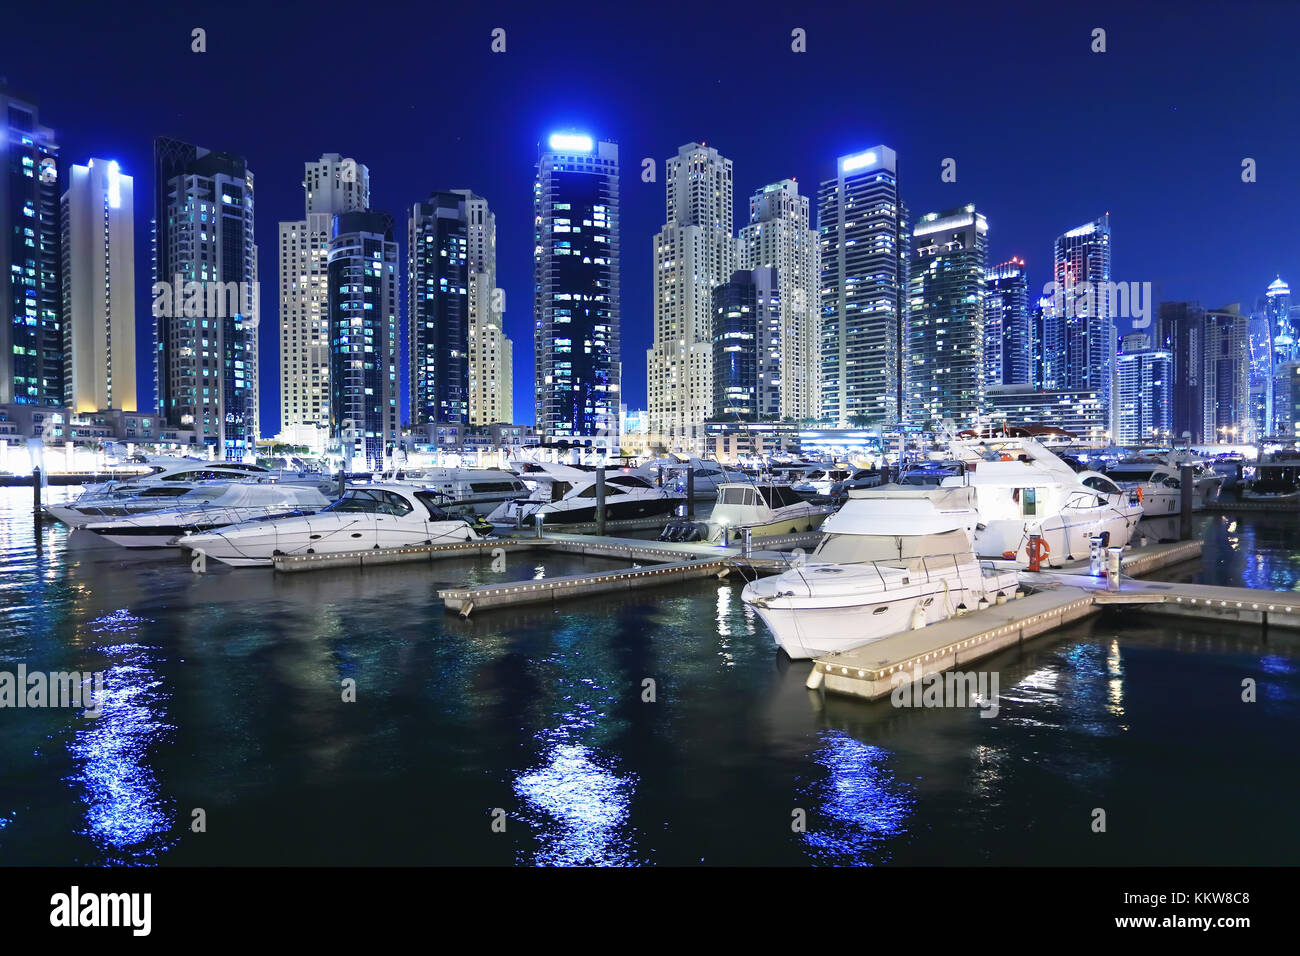 Marina with luxury yachts in Dubai at night. Night skyline of Dubai. Business district of Dubai at night. Stock Photo